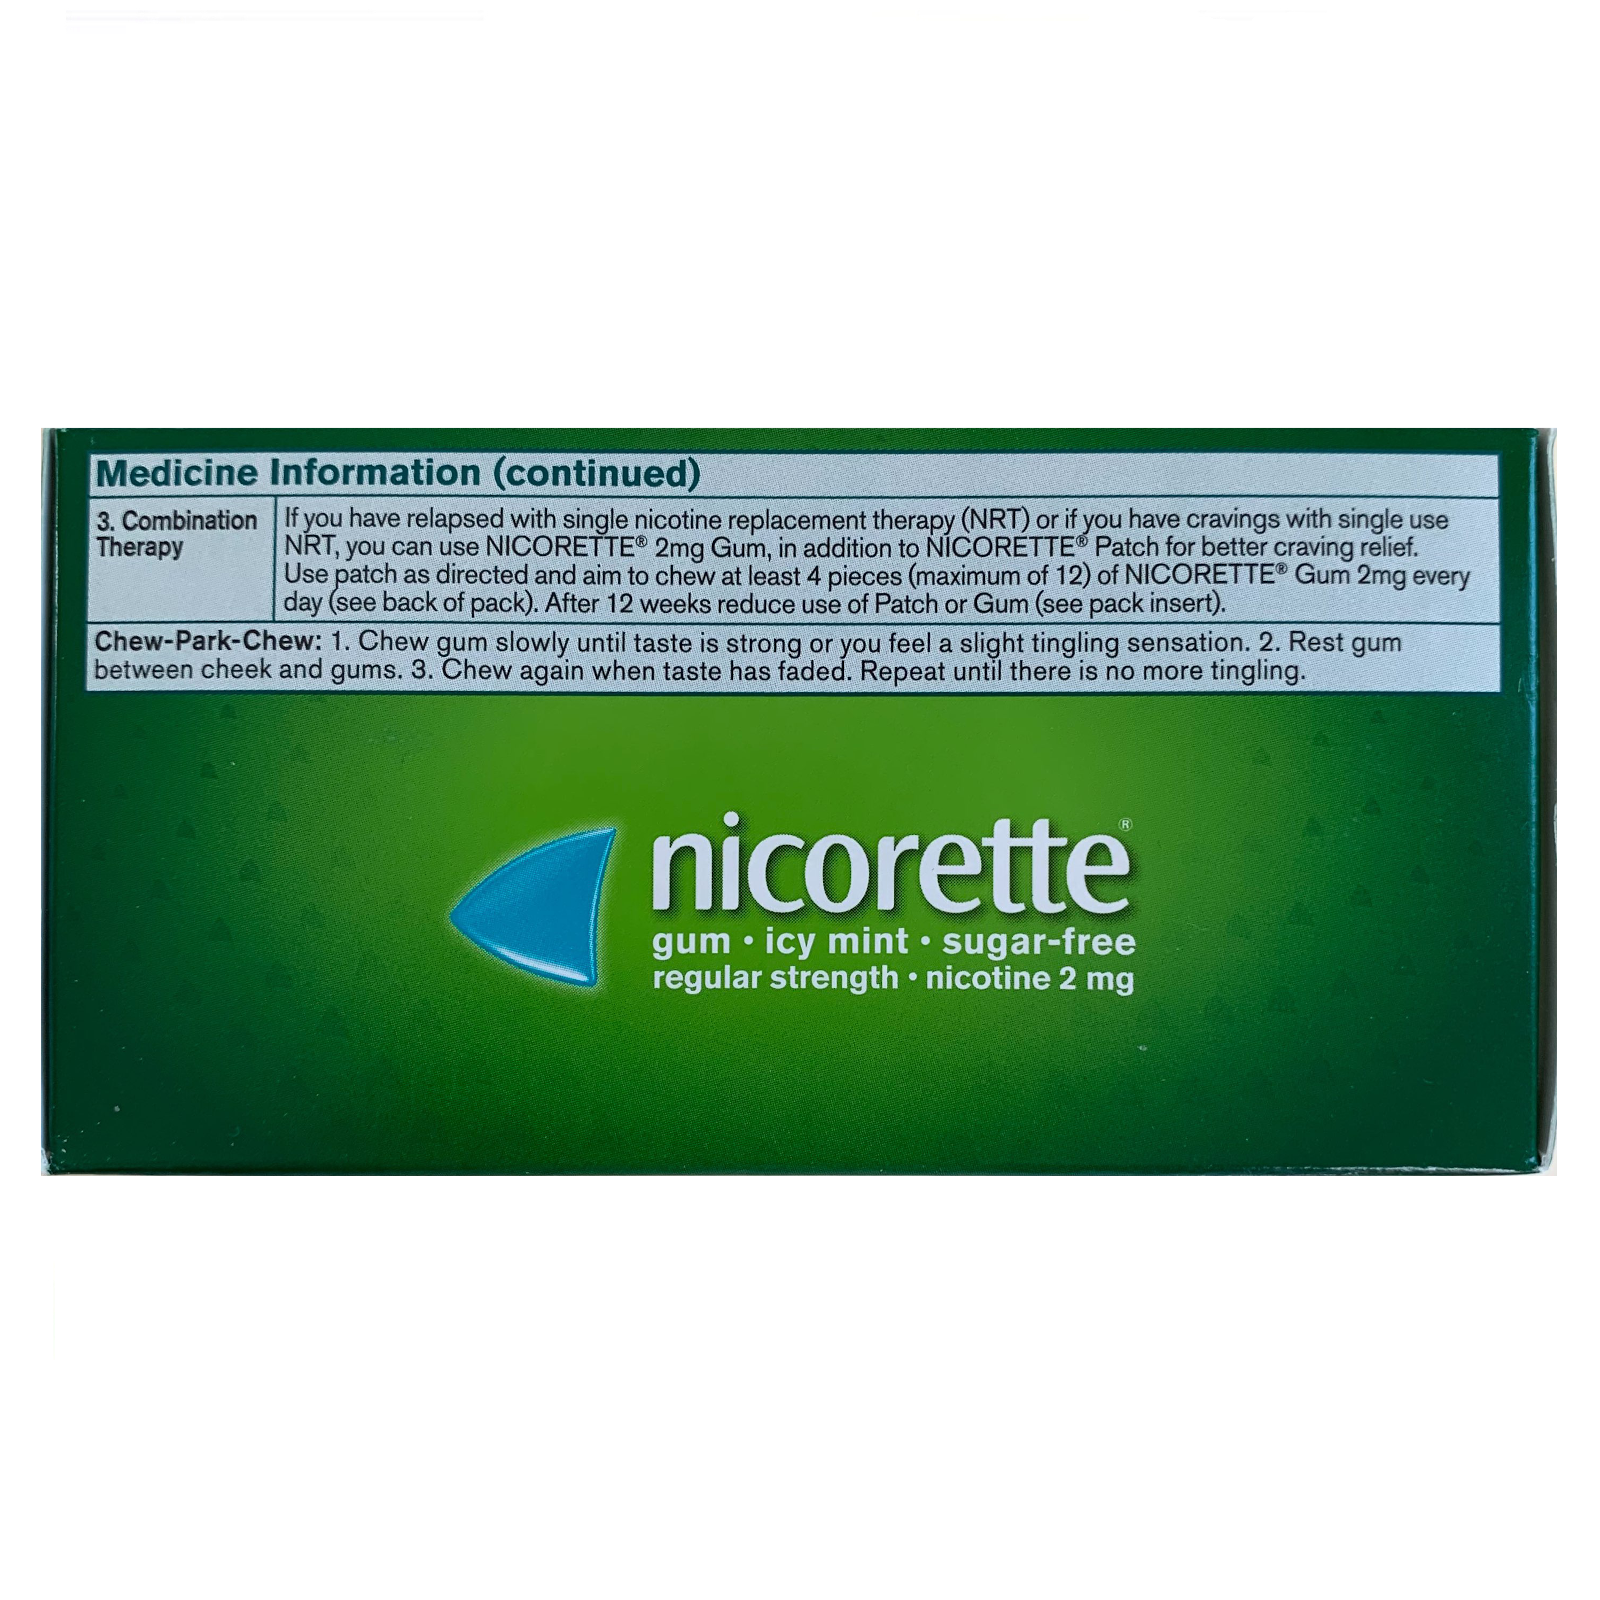 Comprar Nicorette ice mint 2 mg 105 chicles